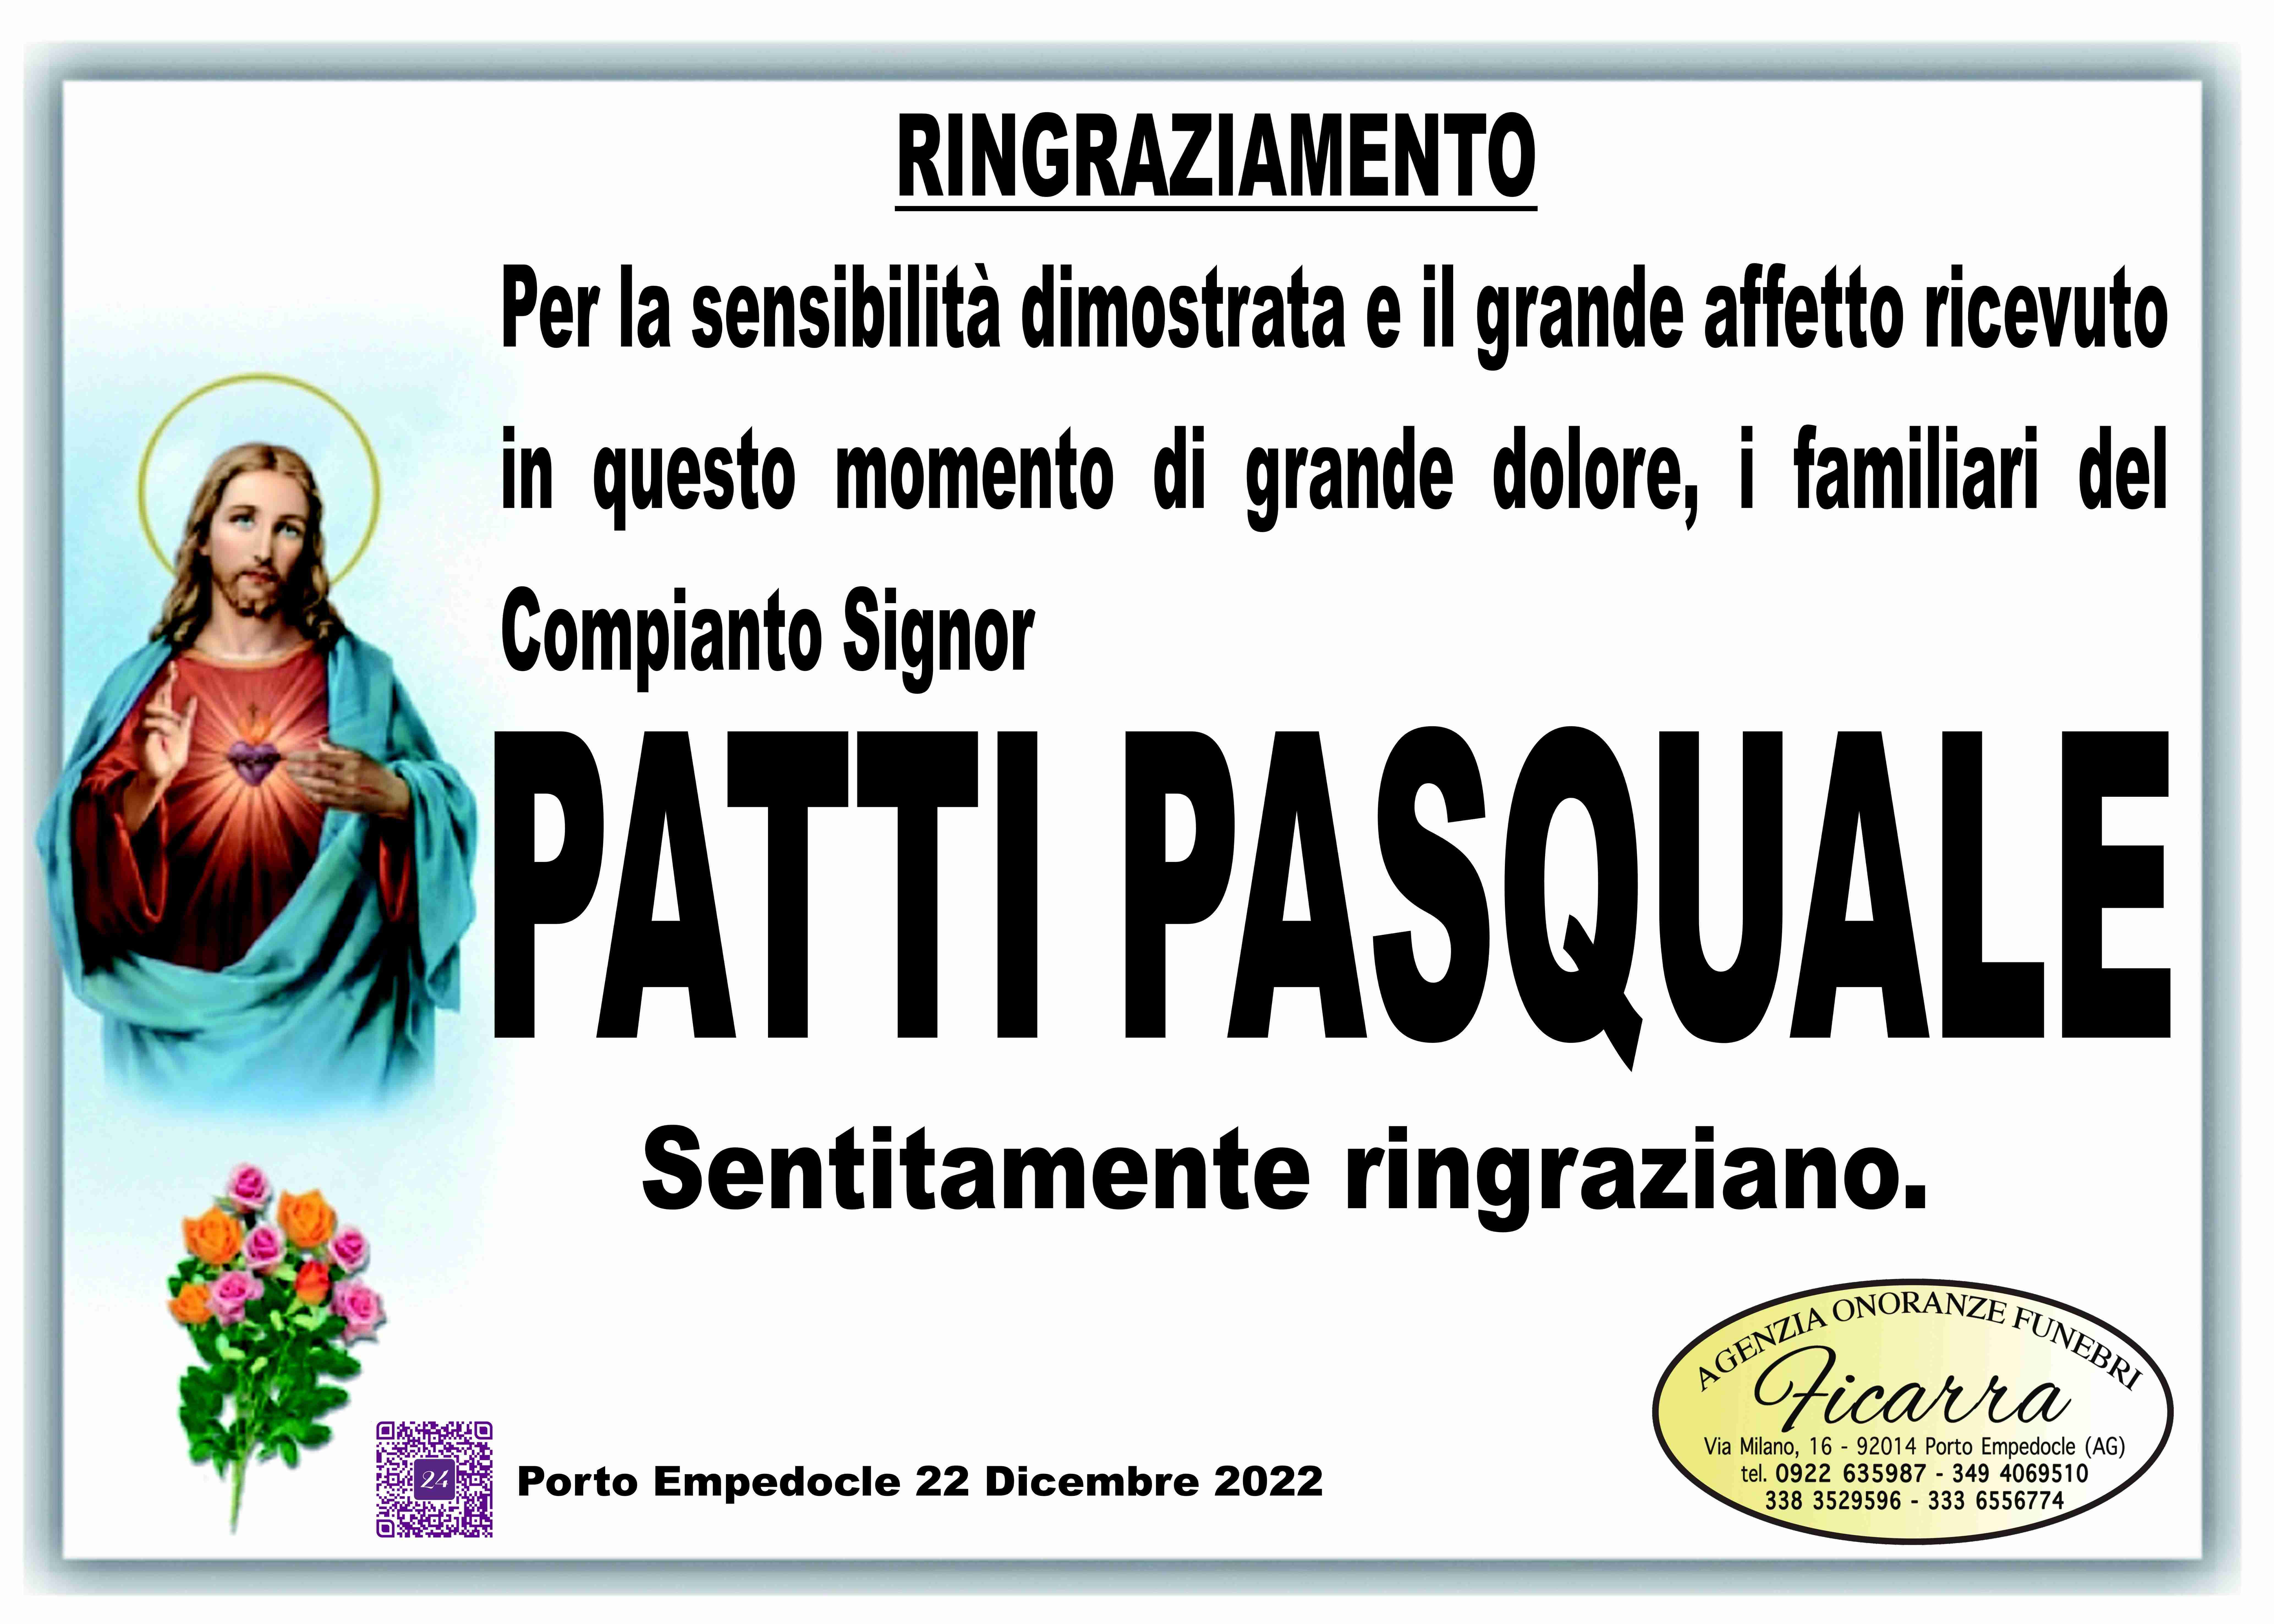 Pasquale Patti